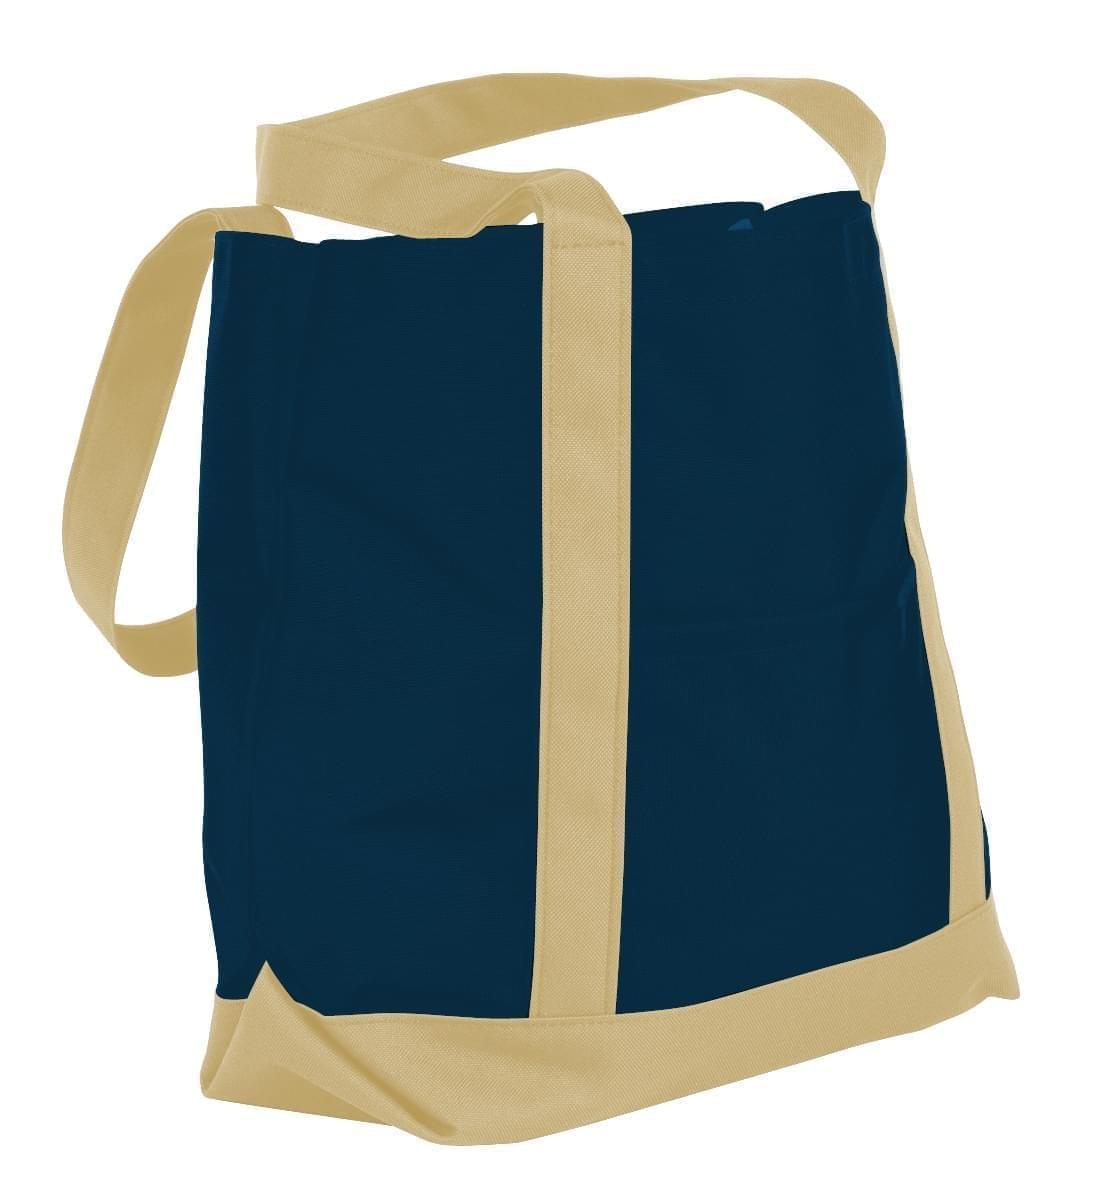 USA Made Canvas Fashion Tote Bags, Navy-Khaki, XAACL1UACX